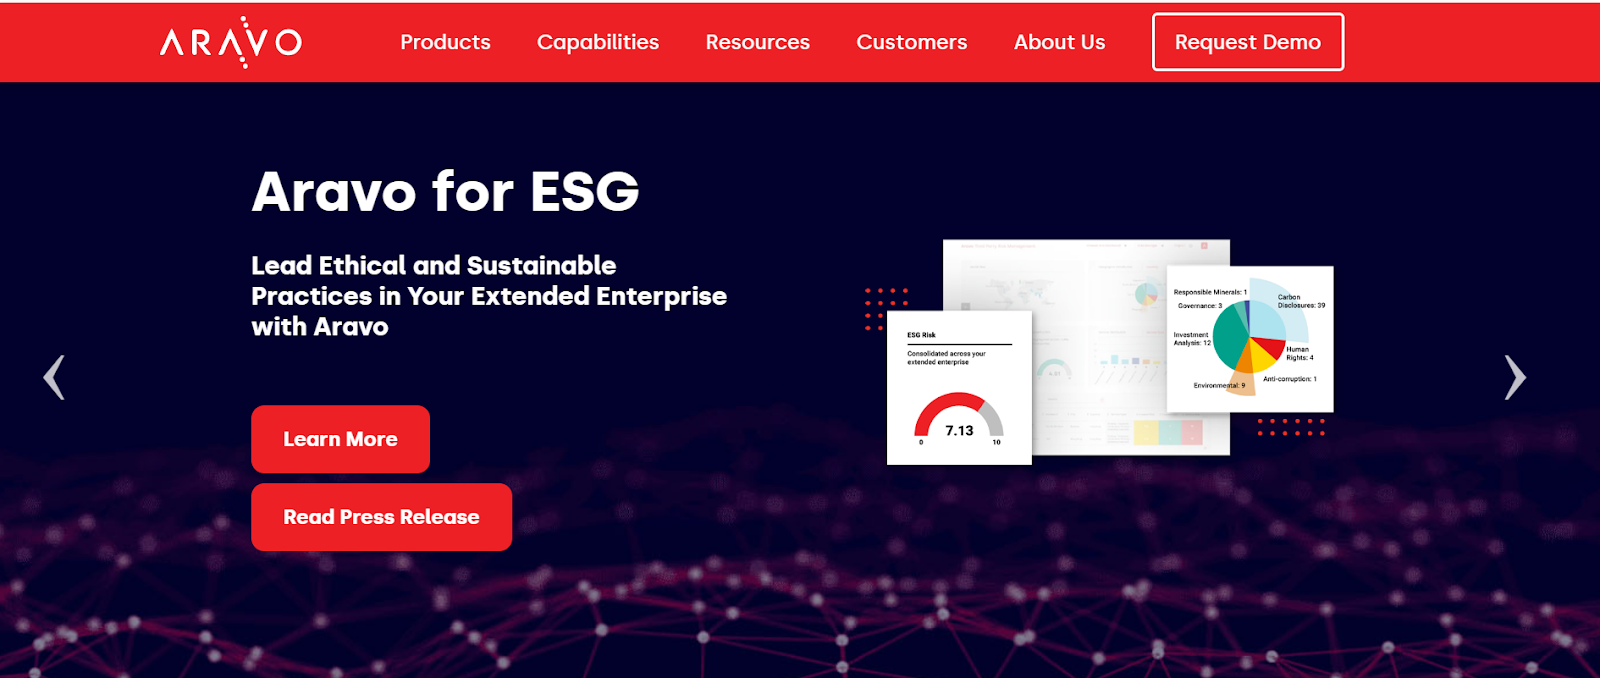 Aravo ESG website interface